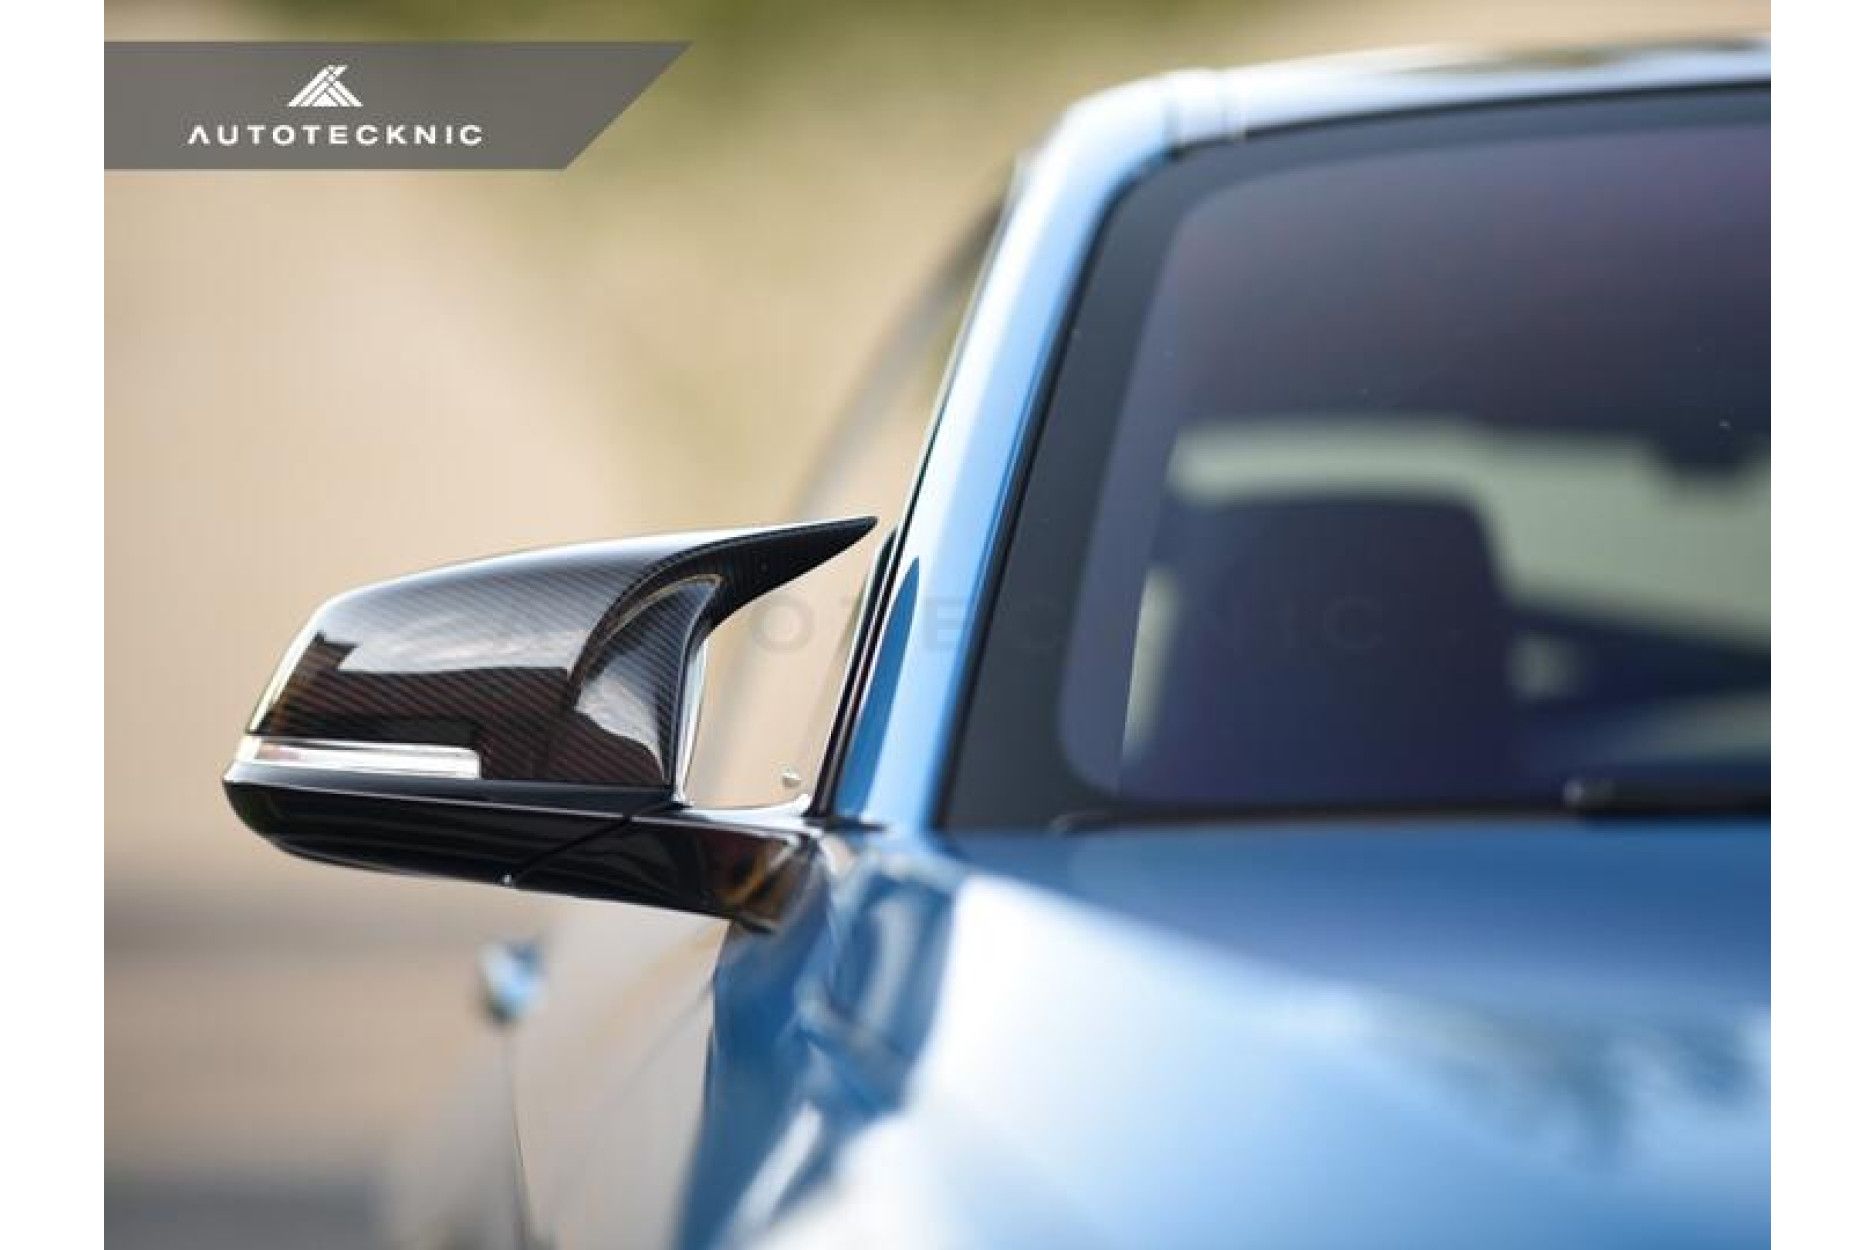 Autotecknic Carbon Spiegelkappen für BMW 2er, 3er, 4er F22, F87, F30, F32